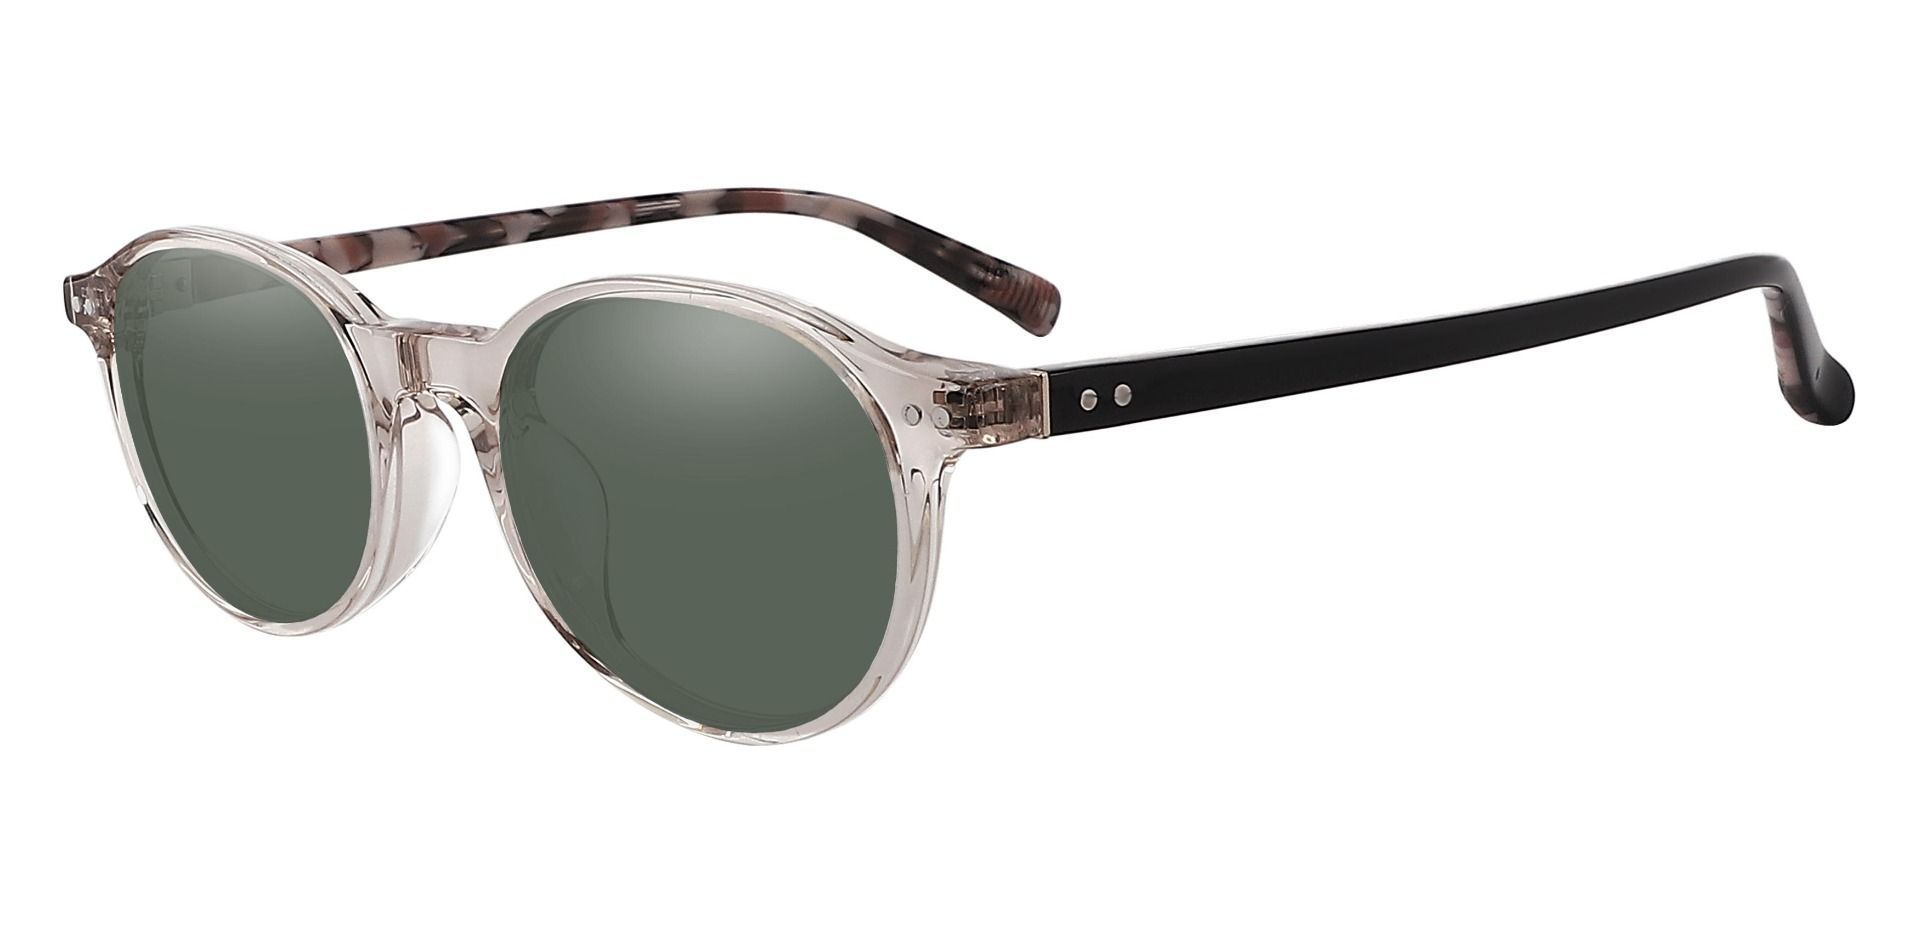 Avon Oval Prescription Sunglasses - Clear Frame With Green Lenses